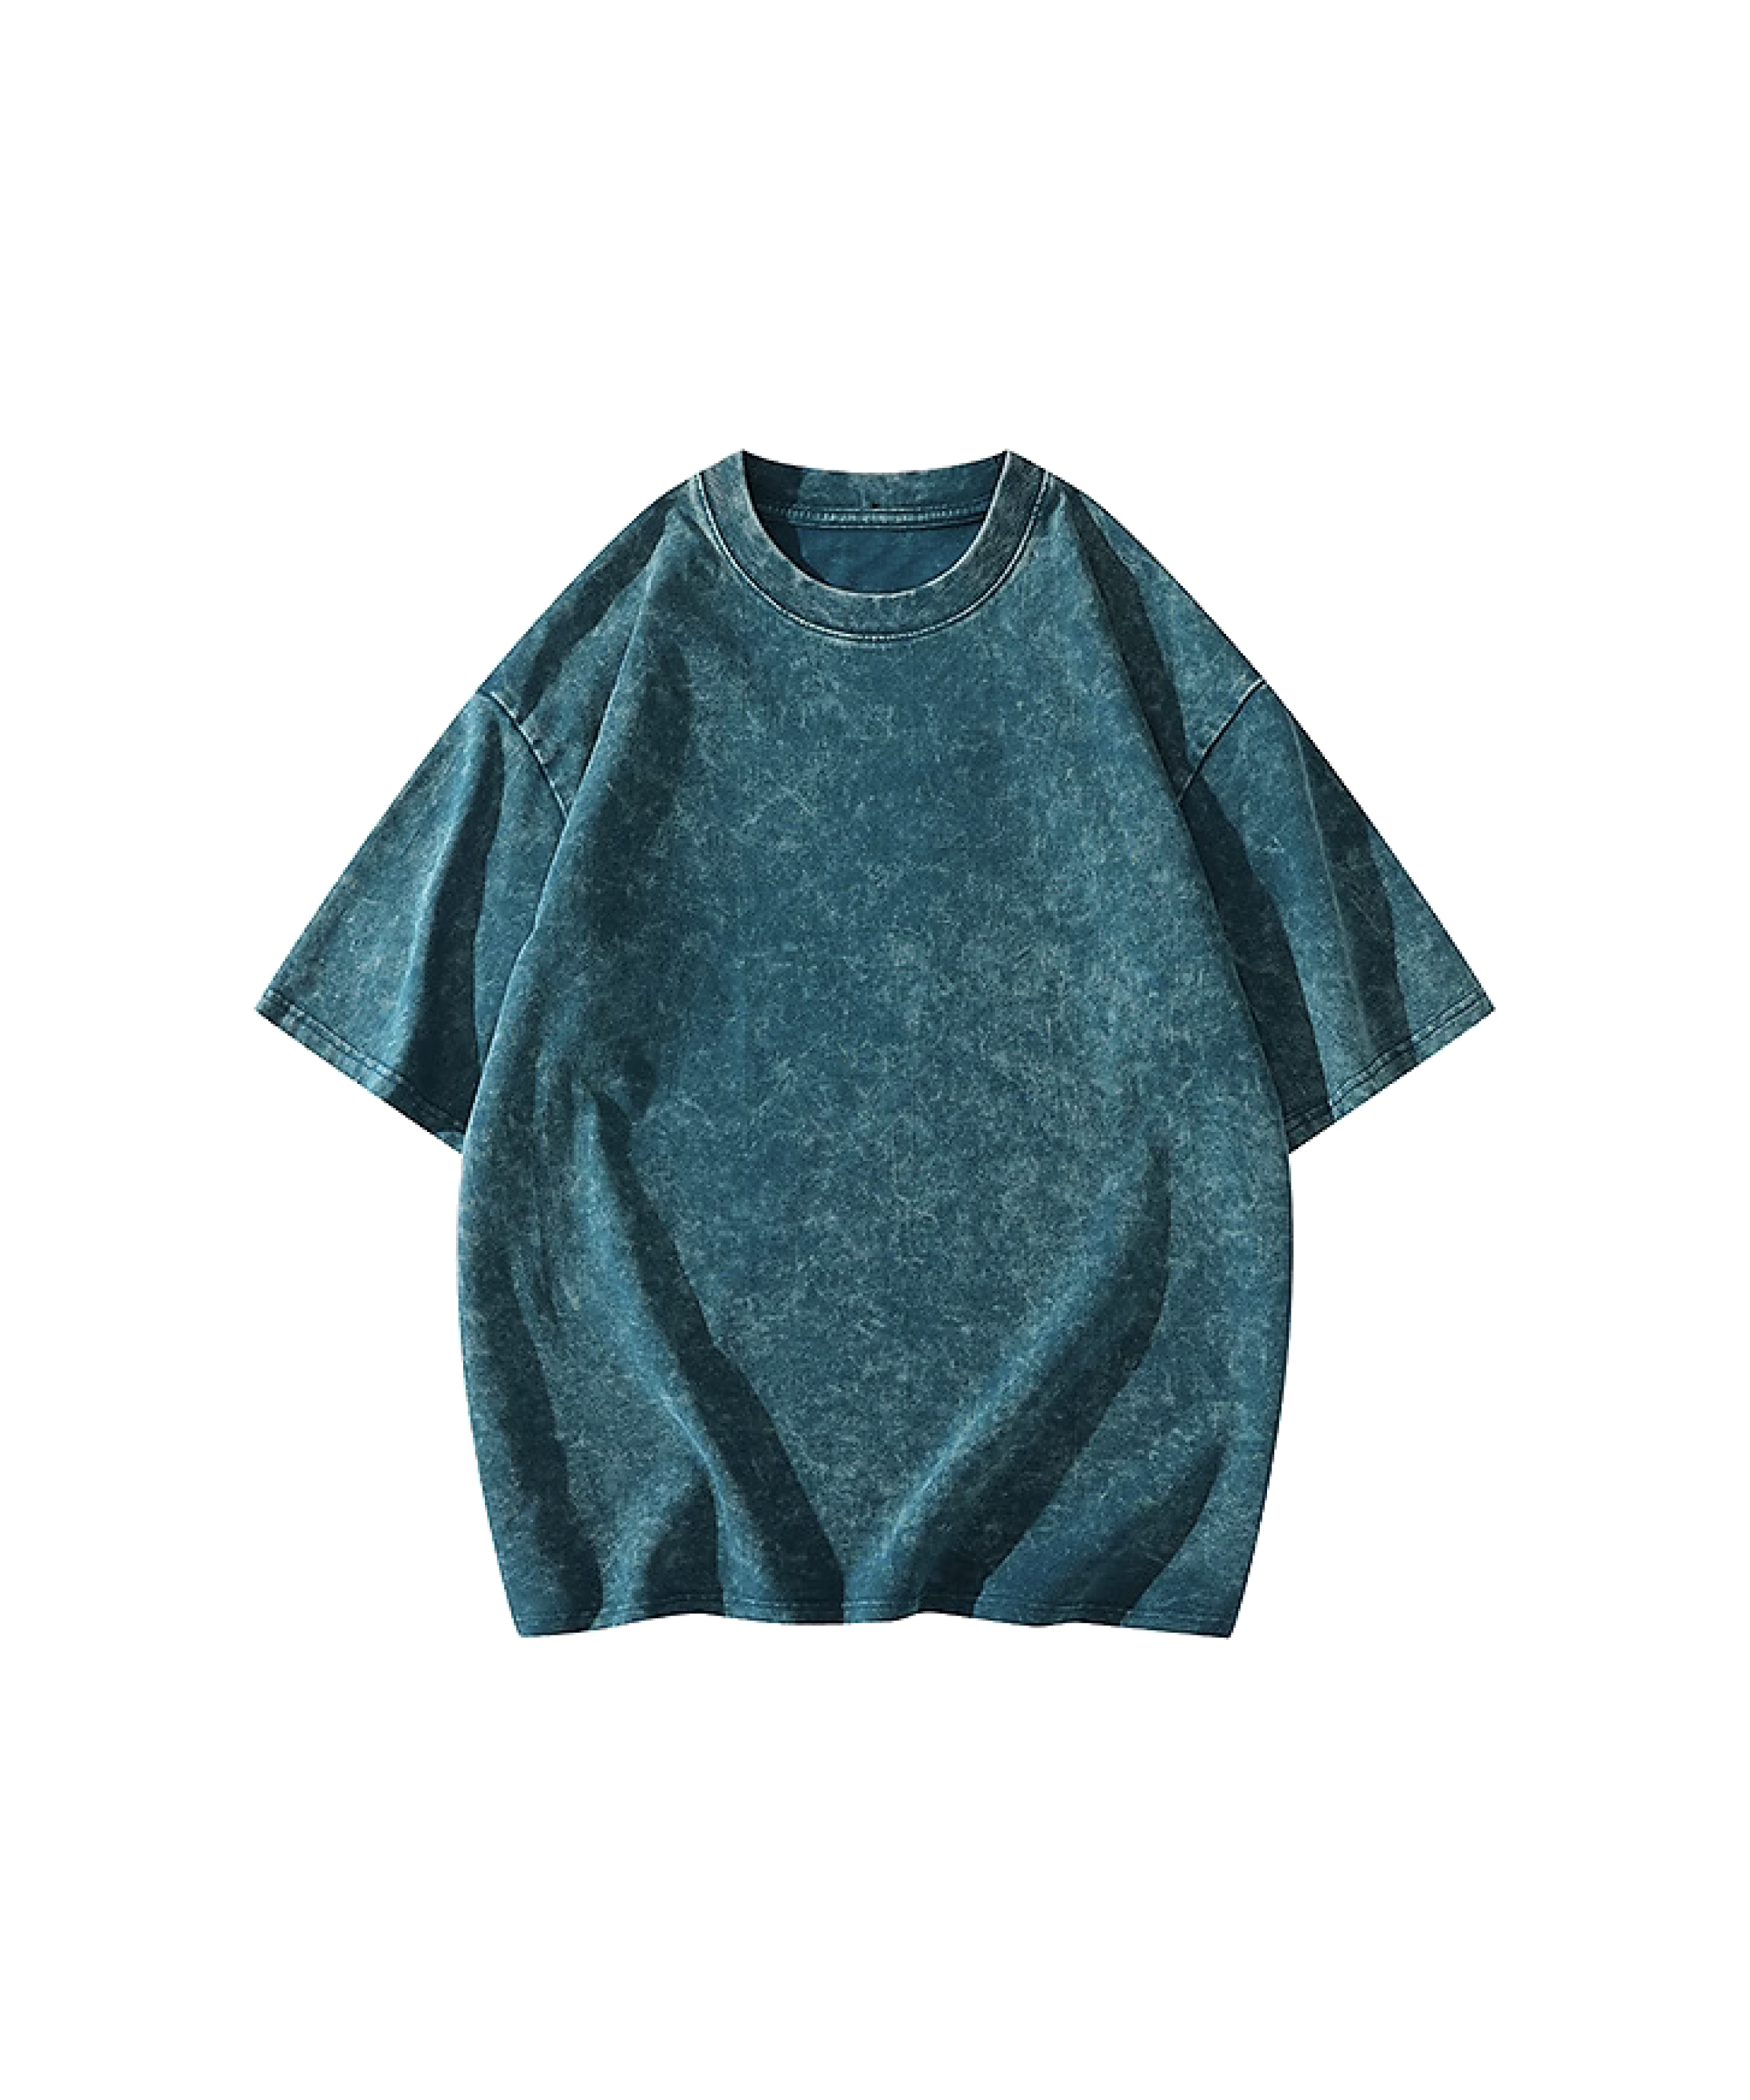 Tye Dye Round Collar T-shirt